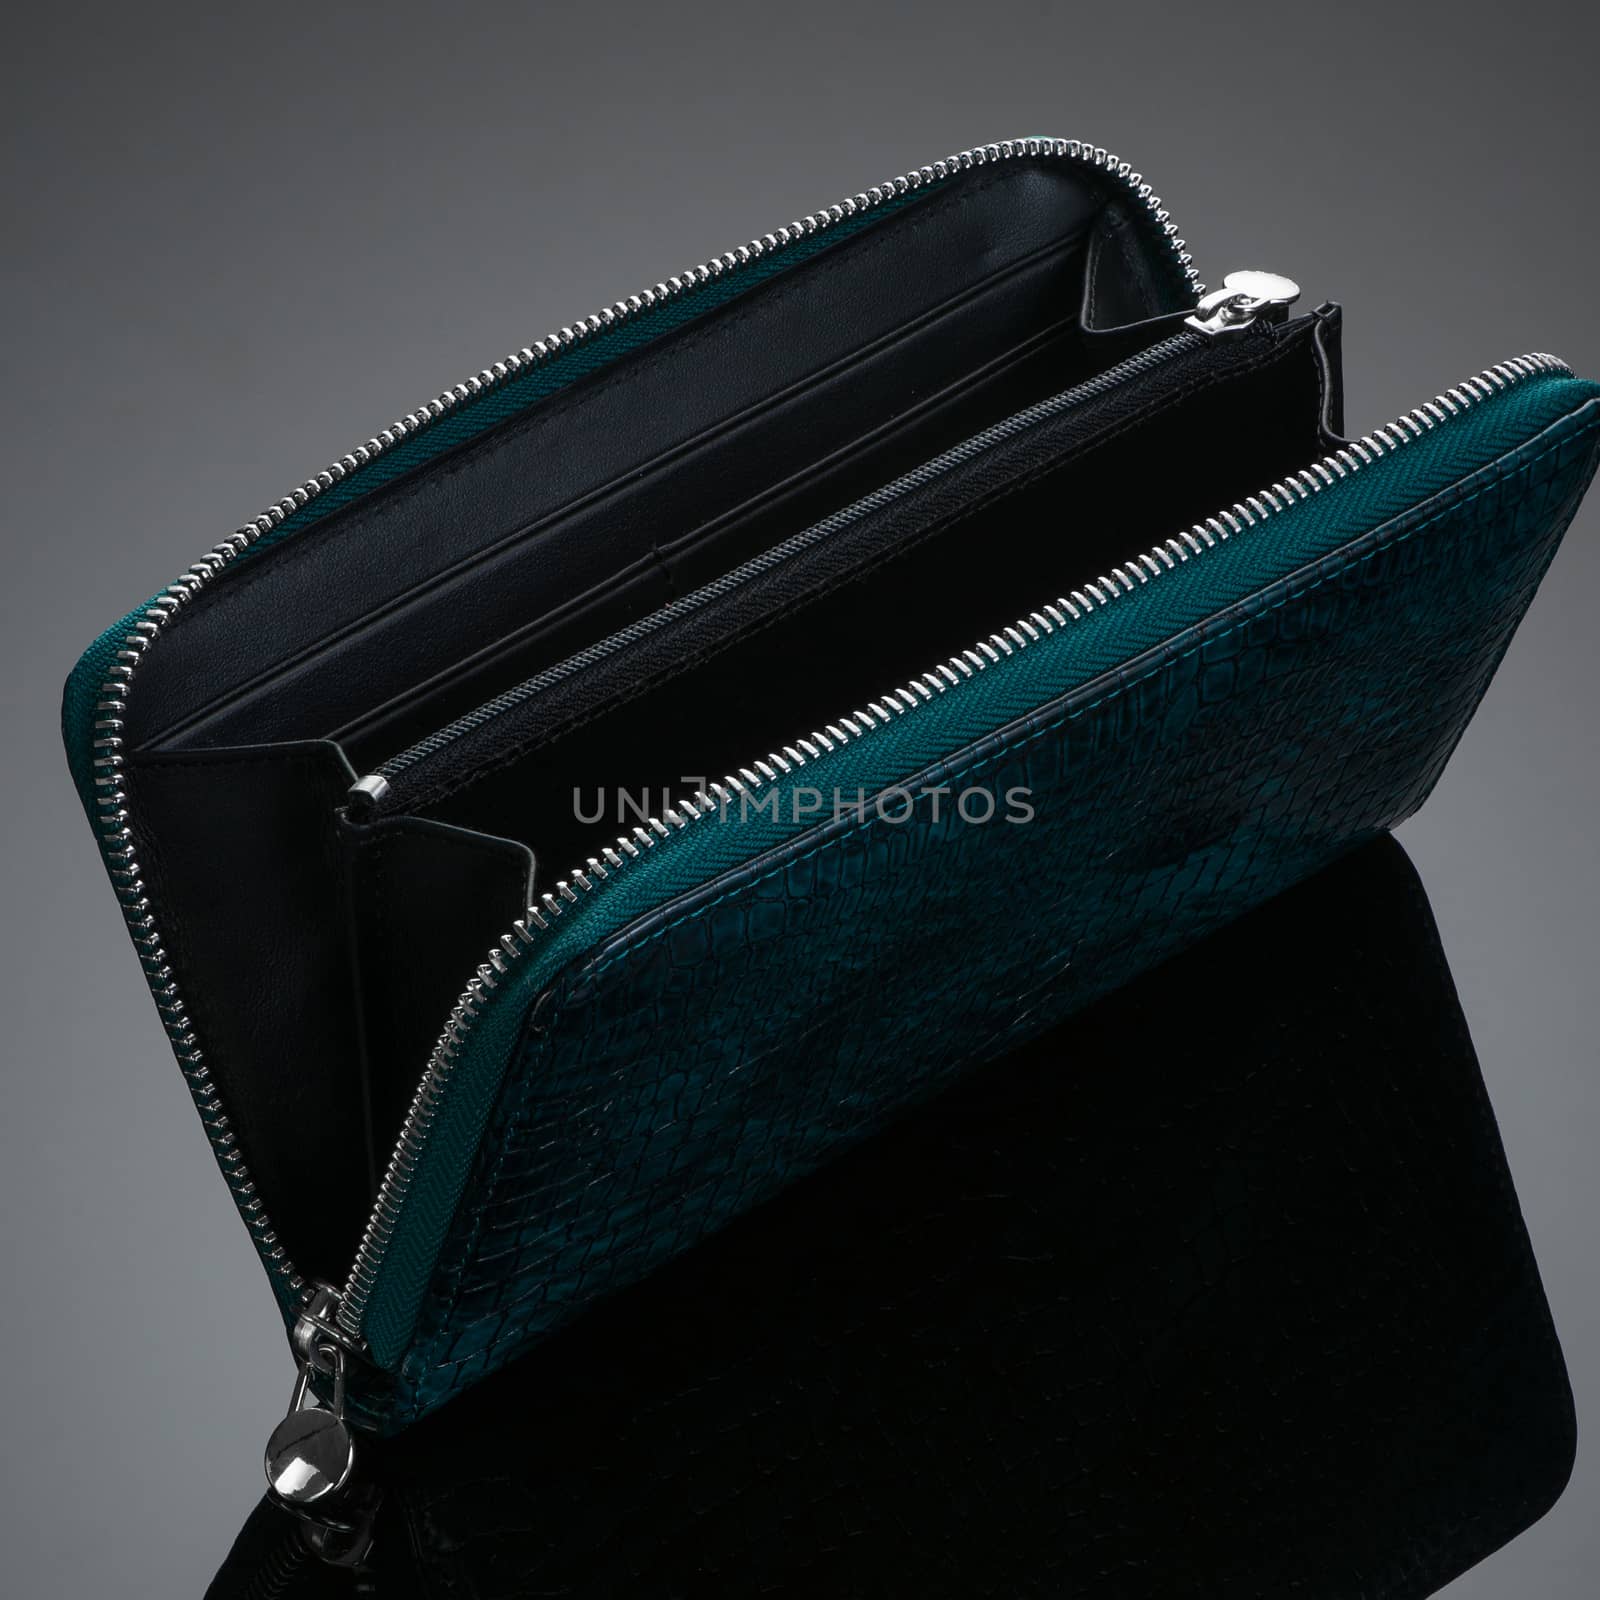 Fashionable designer leather women's wallet on a dark background